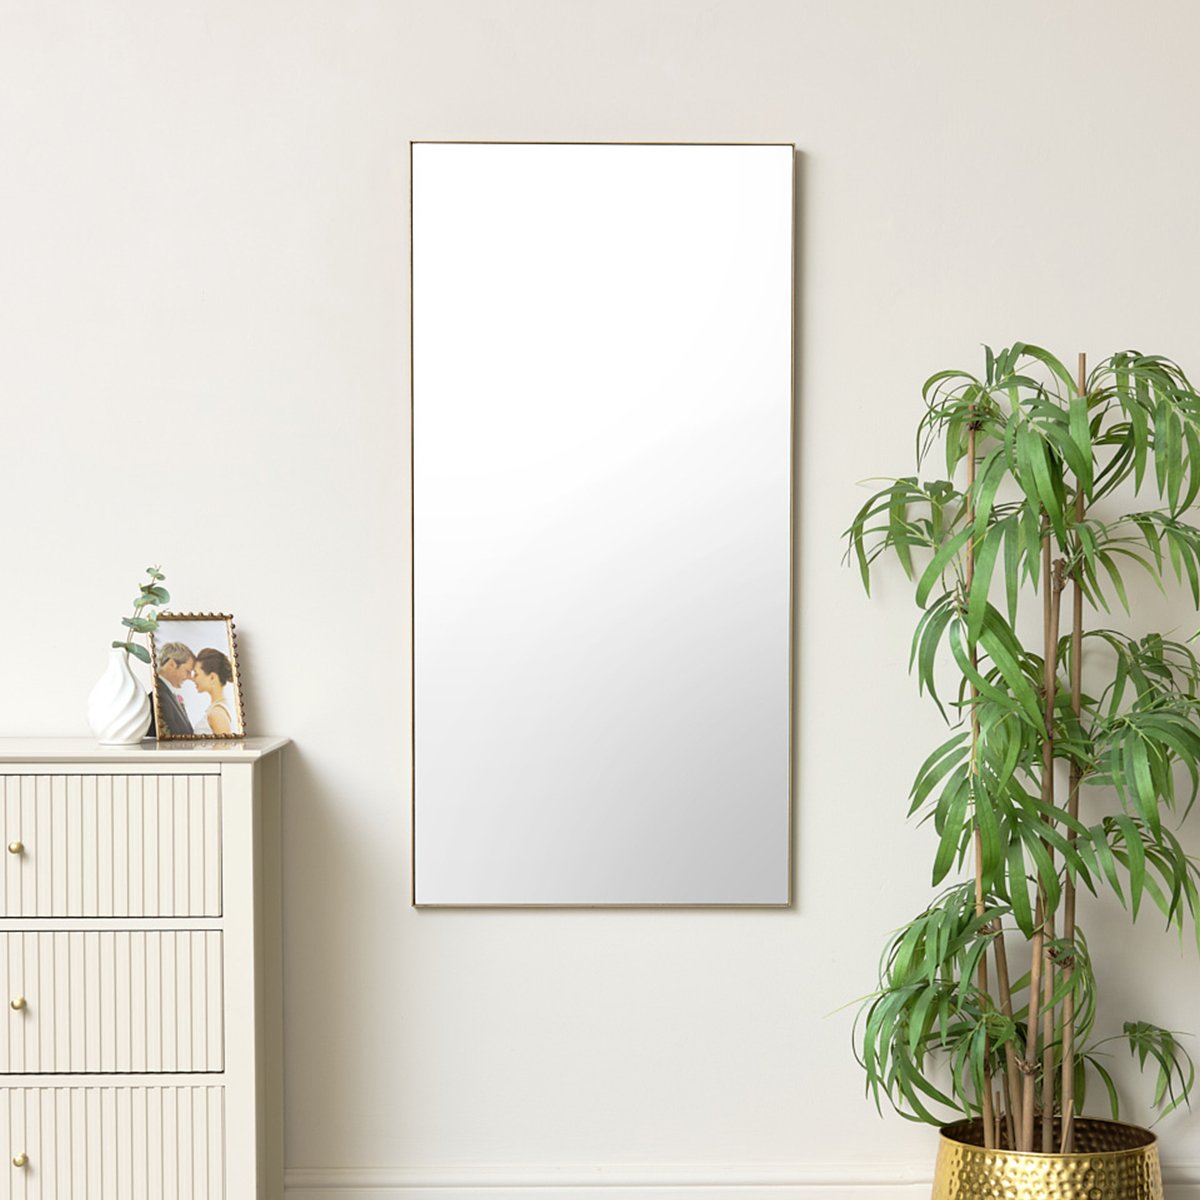 Gold Thin Framed Rectangle Wall Mirror 110cm x 55cm